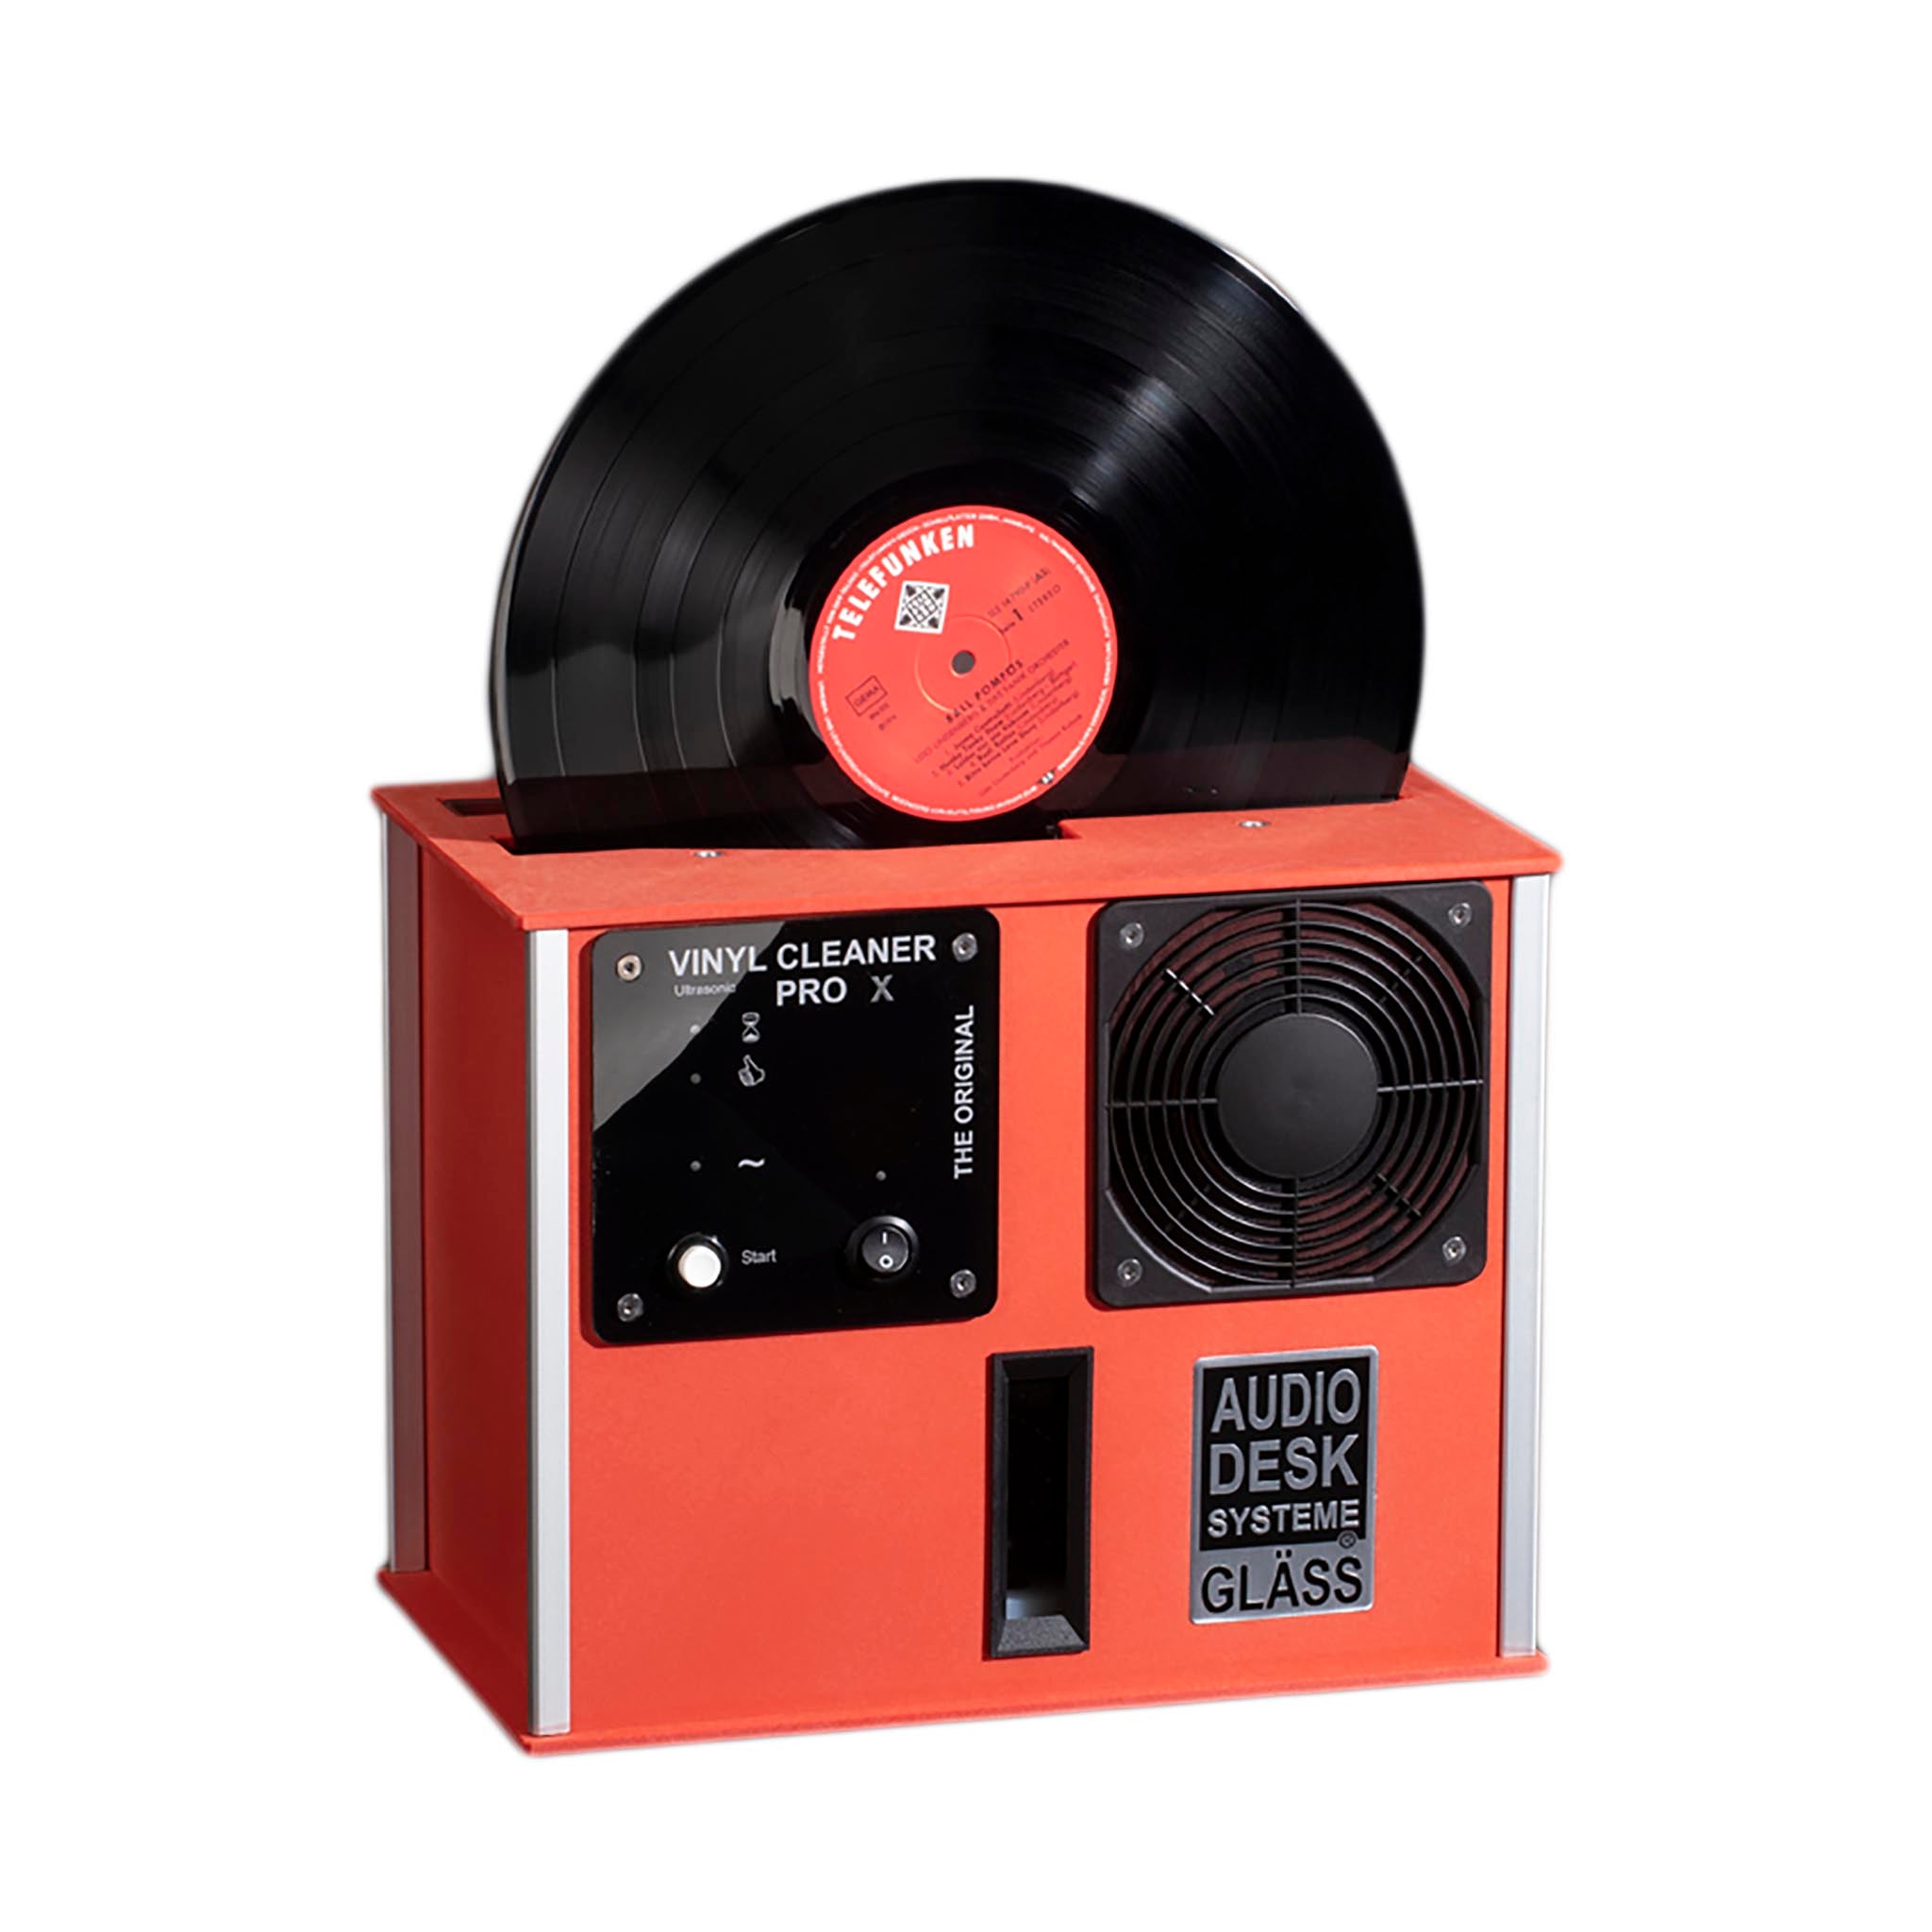 Audio Desk Vinyl Cleaner Pro X Record Cleaning Machine - Grey